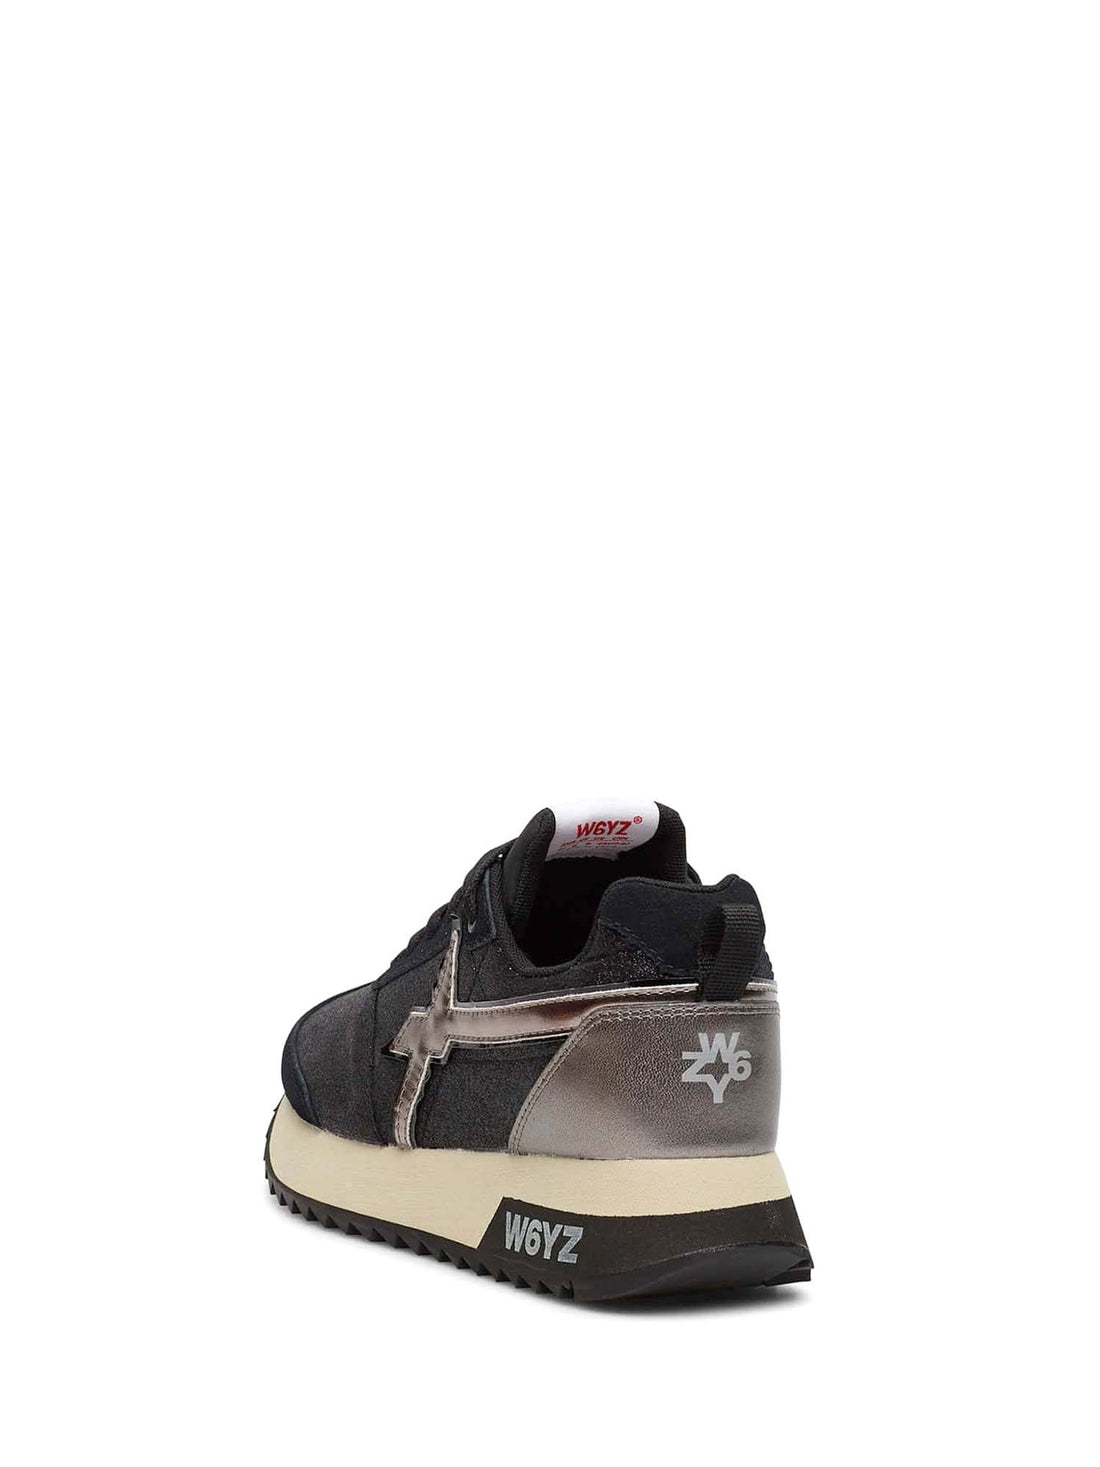 Sneakers Nero W6yz